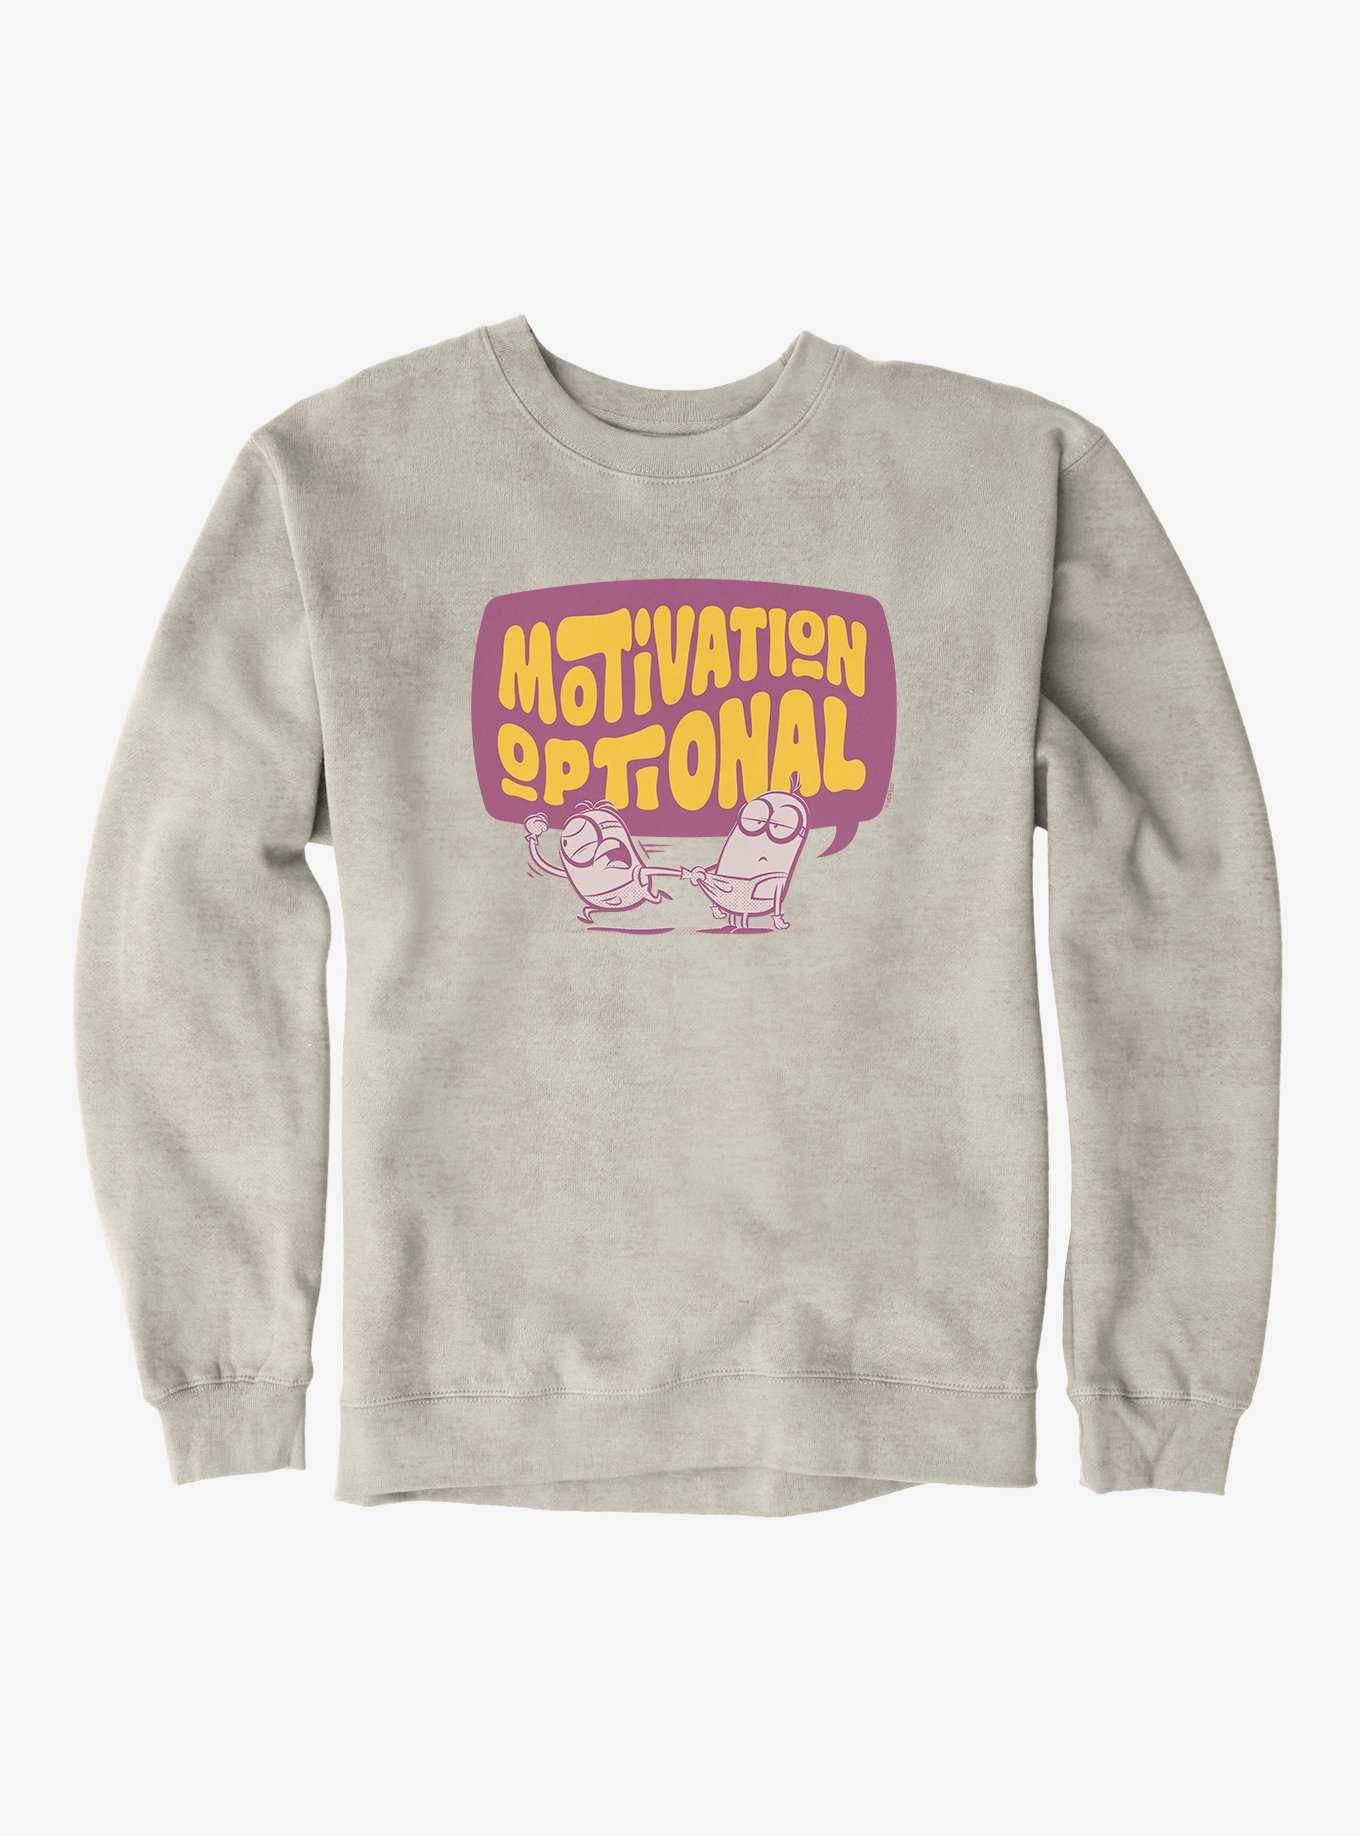 Minions Motivation Optional Sweatshirt, , hi-res